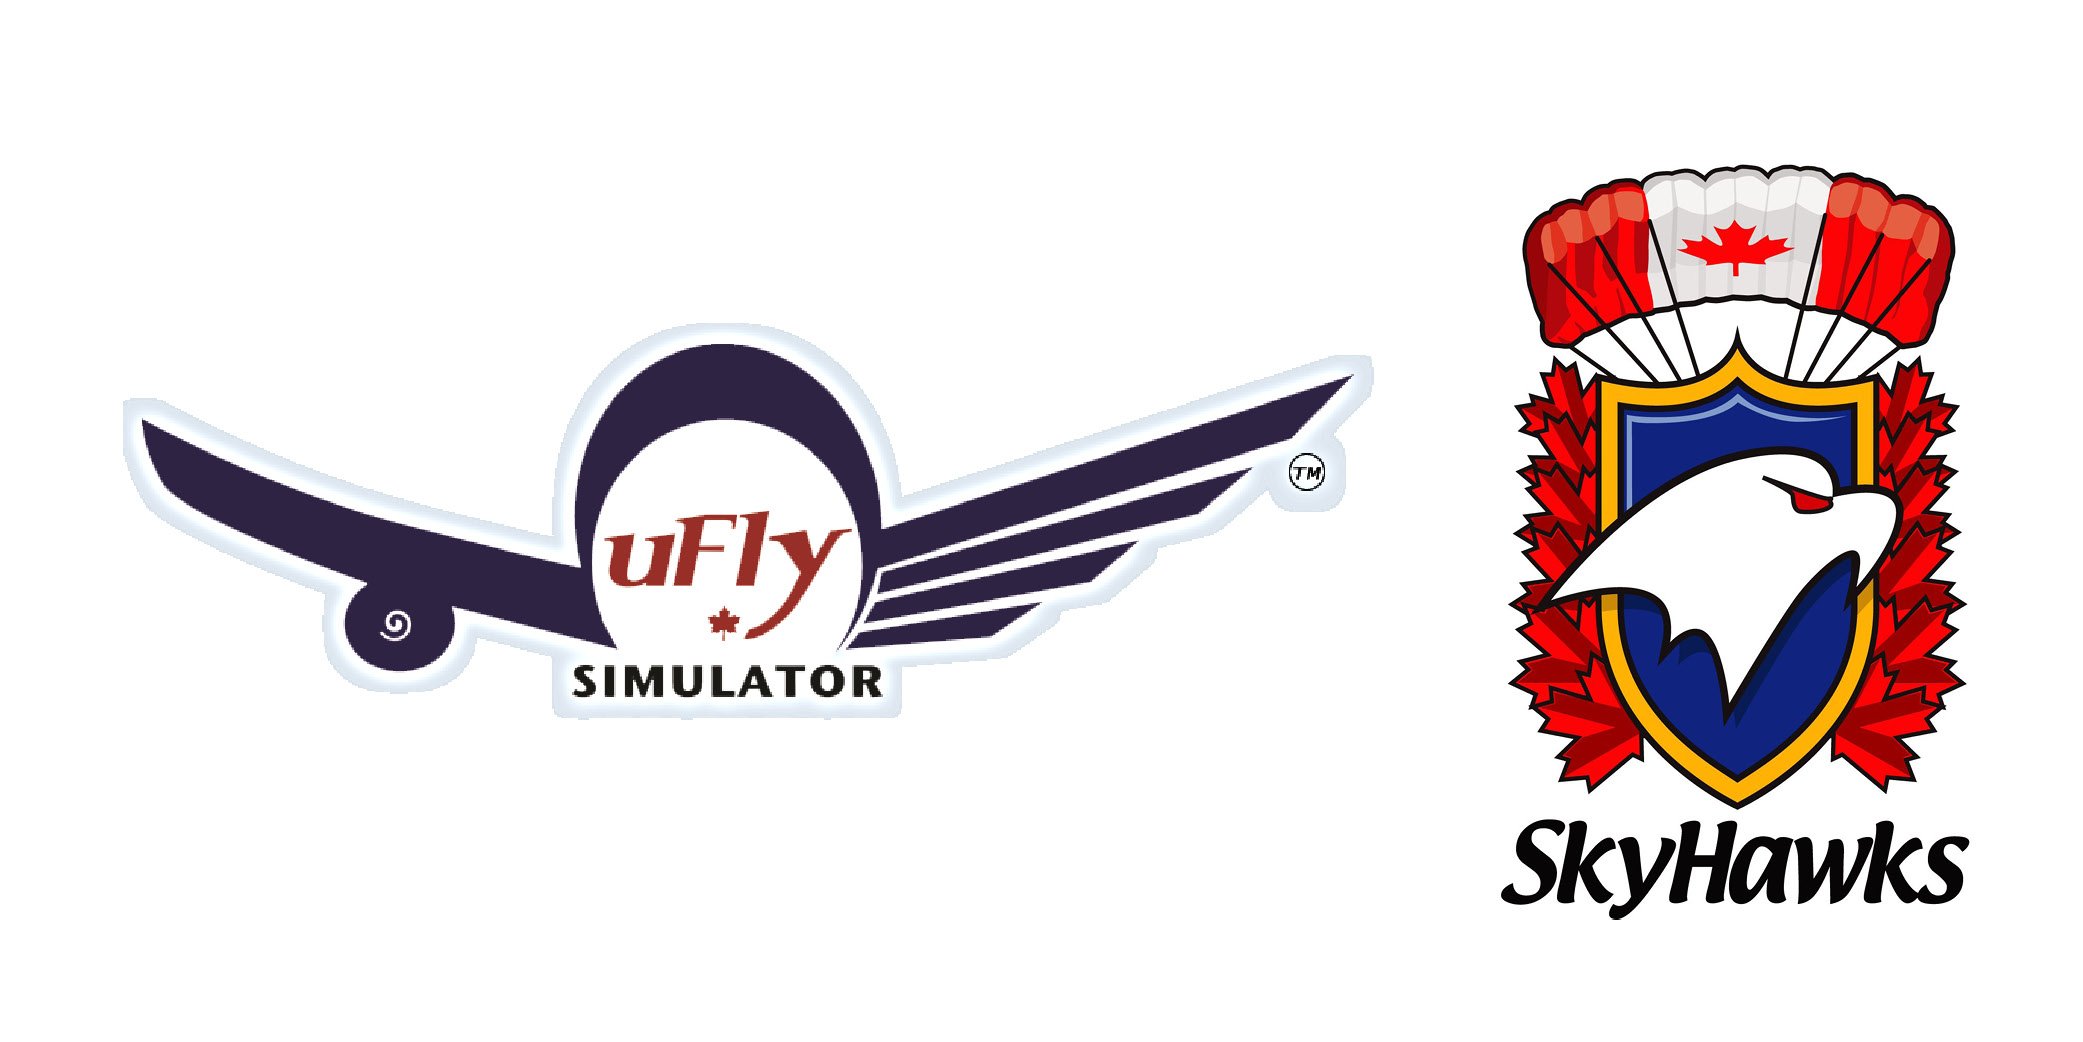 Ufly Simulator and Sky Hawks logo